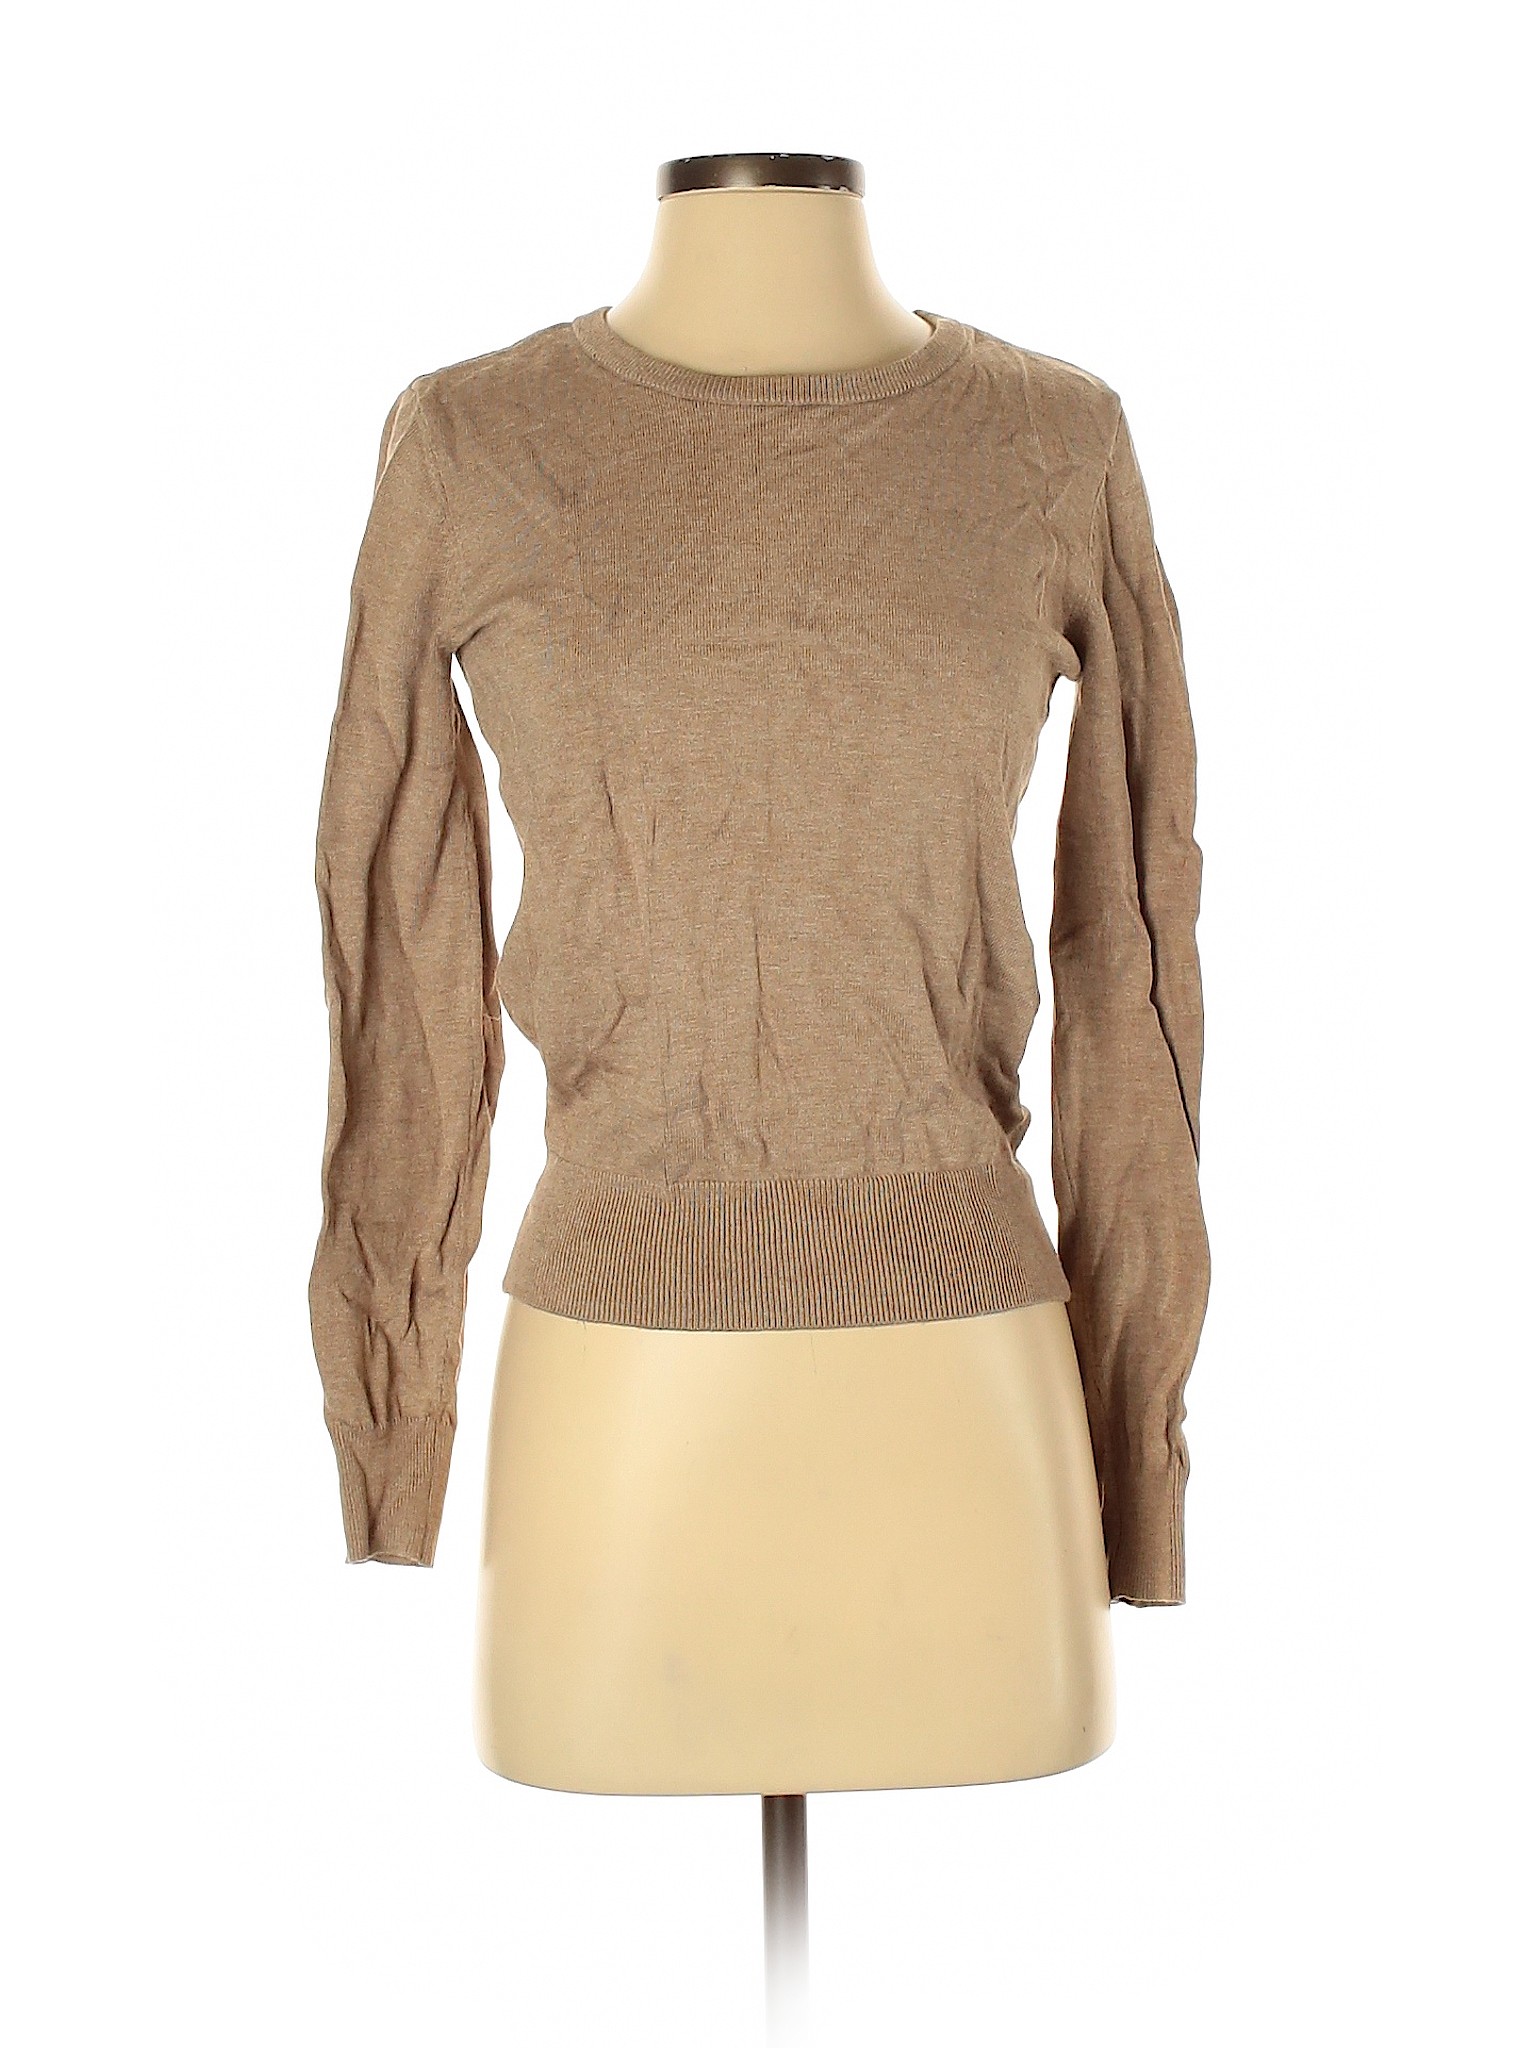 H&M Women Brown Pullover Sweater XS | eBay